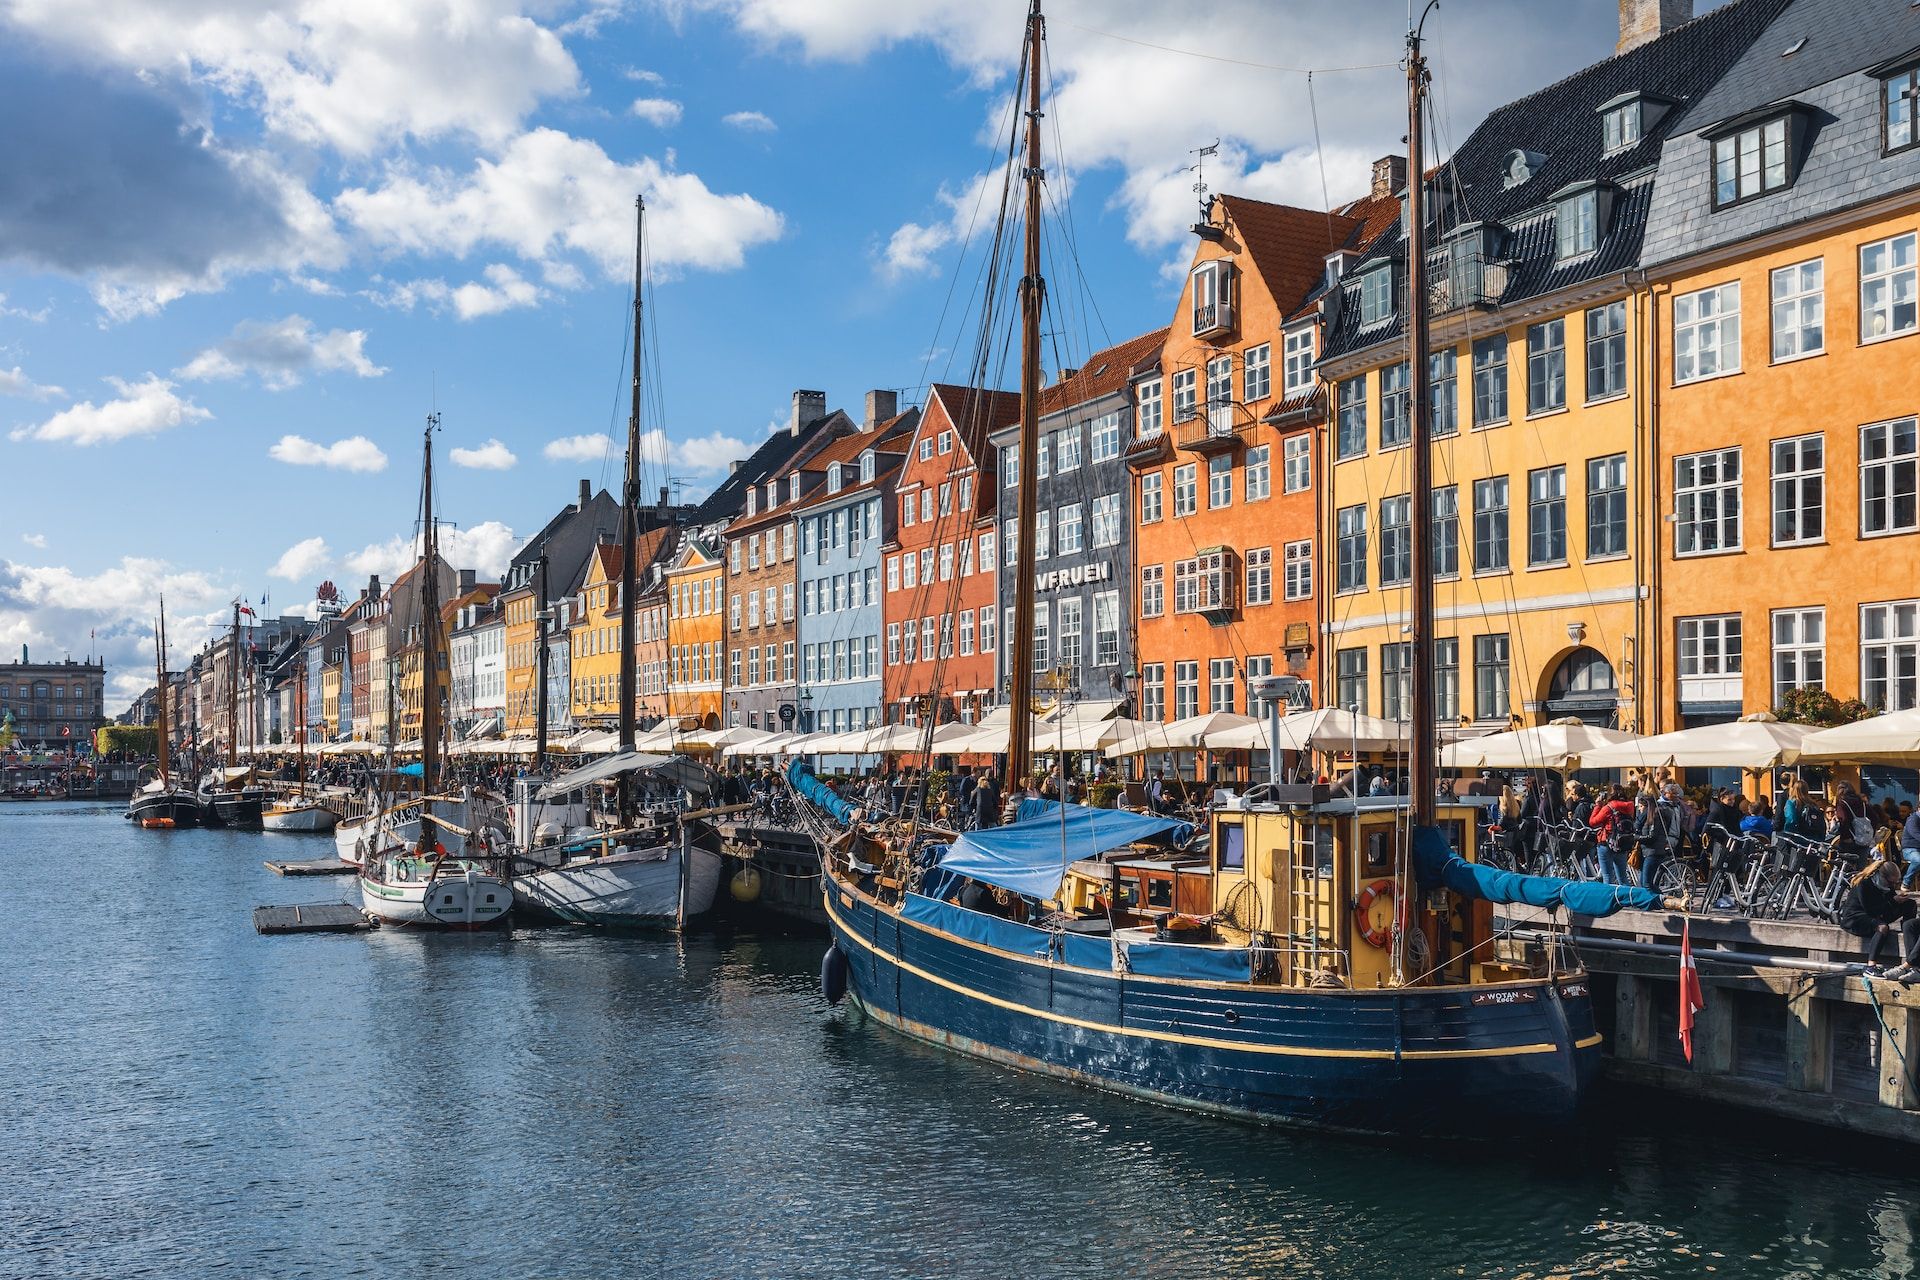 Nyhavn, a canal district in Copenhagen